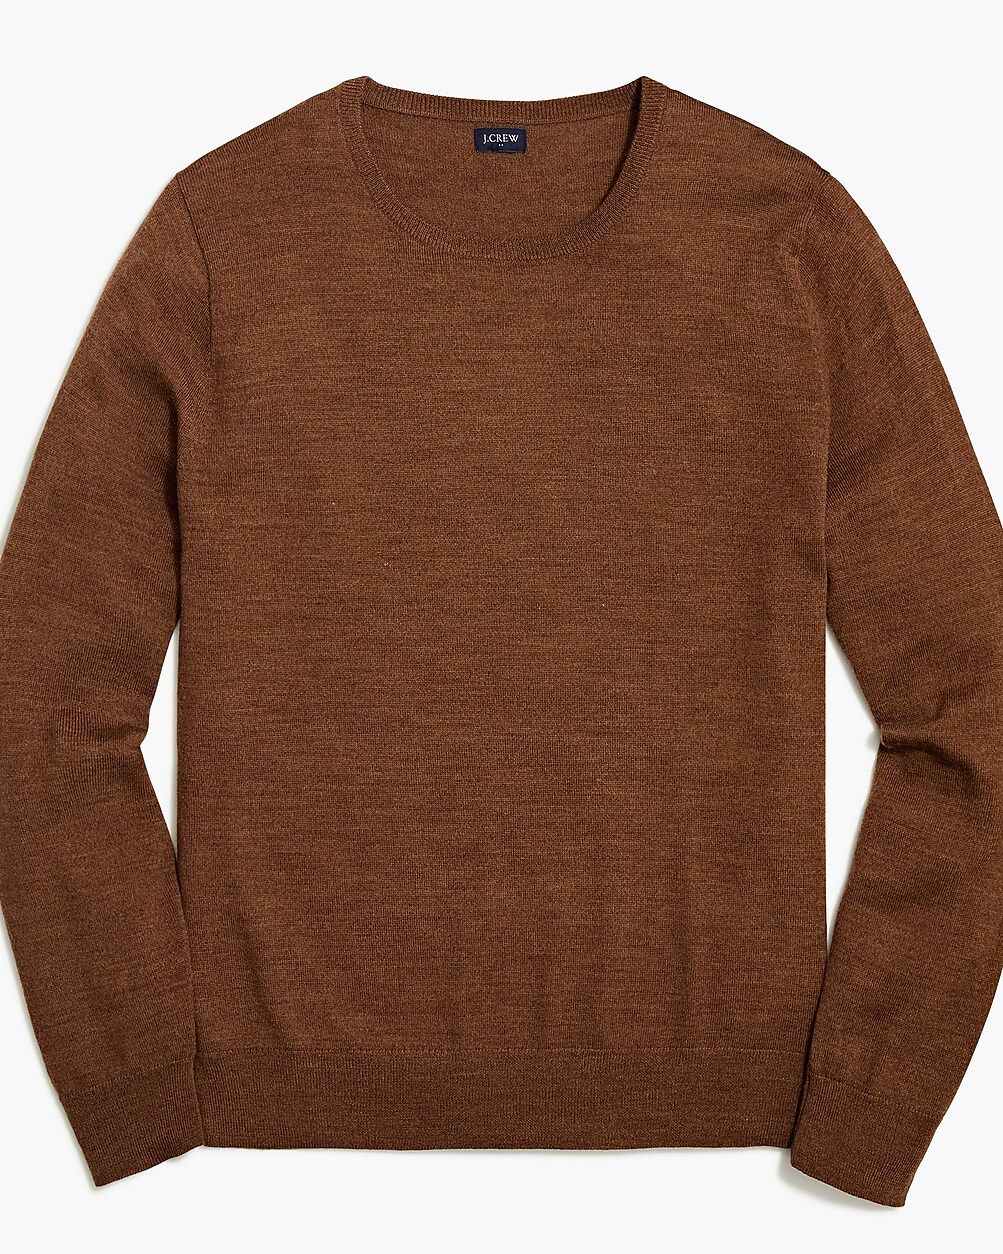 Machine-washable merino wool-blend crewneck sweater | J.Crew Factory